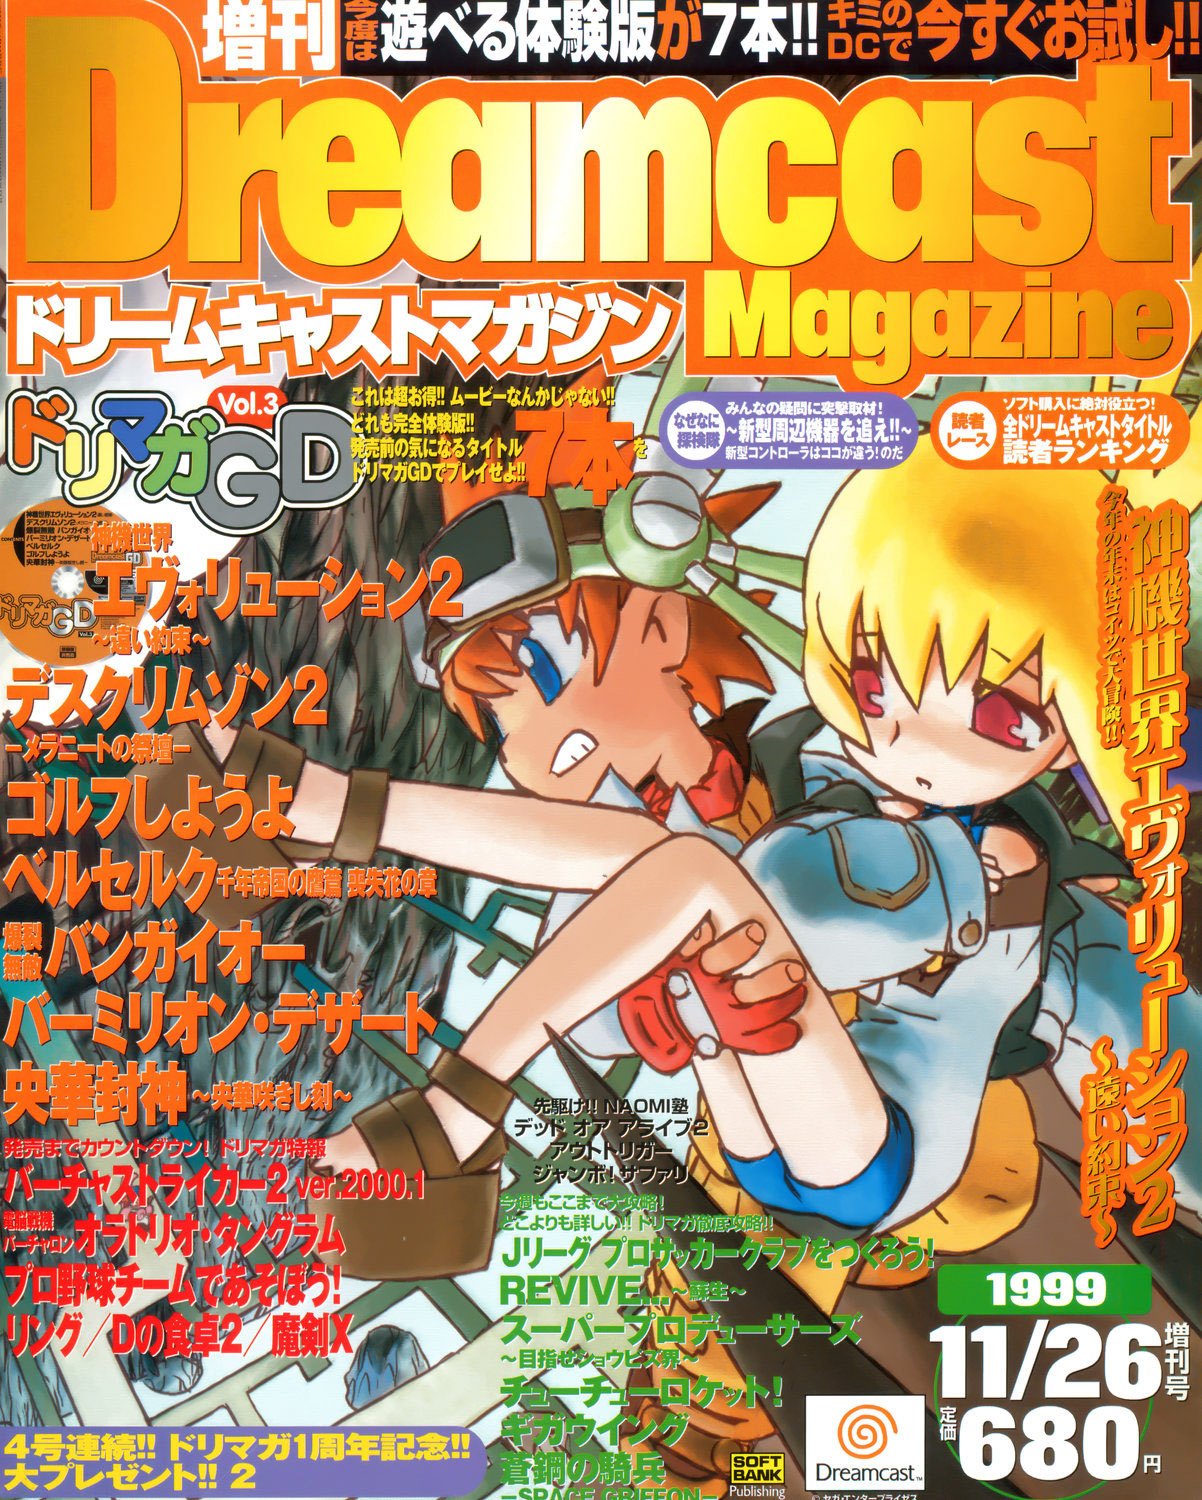 Dreamcast Magazine 047 (November 26, 1999)